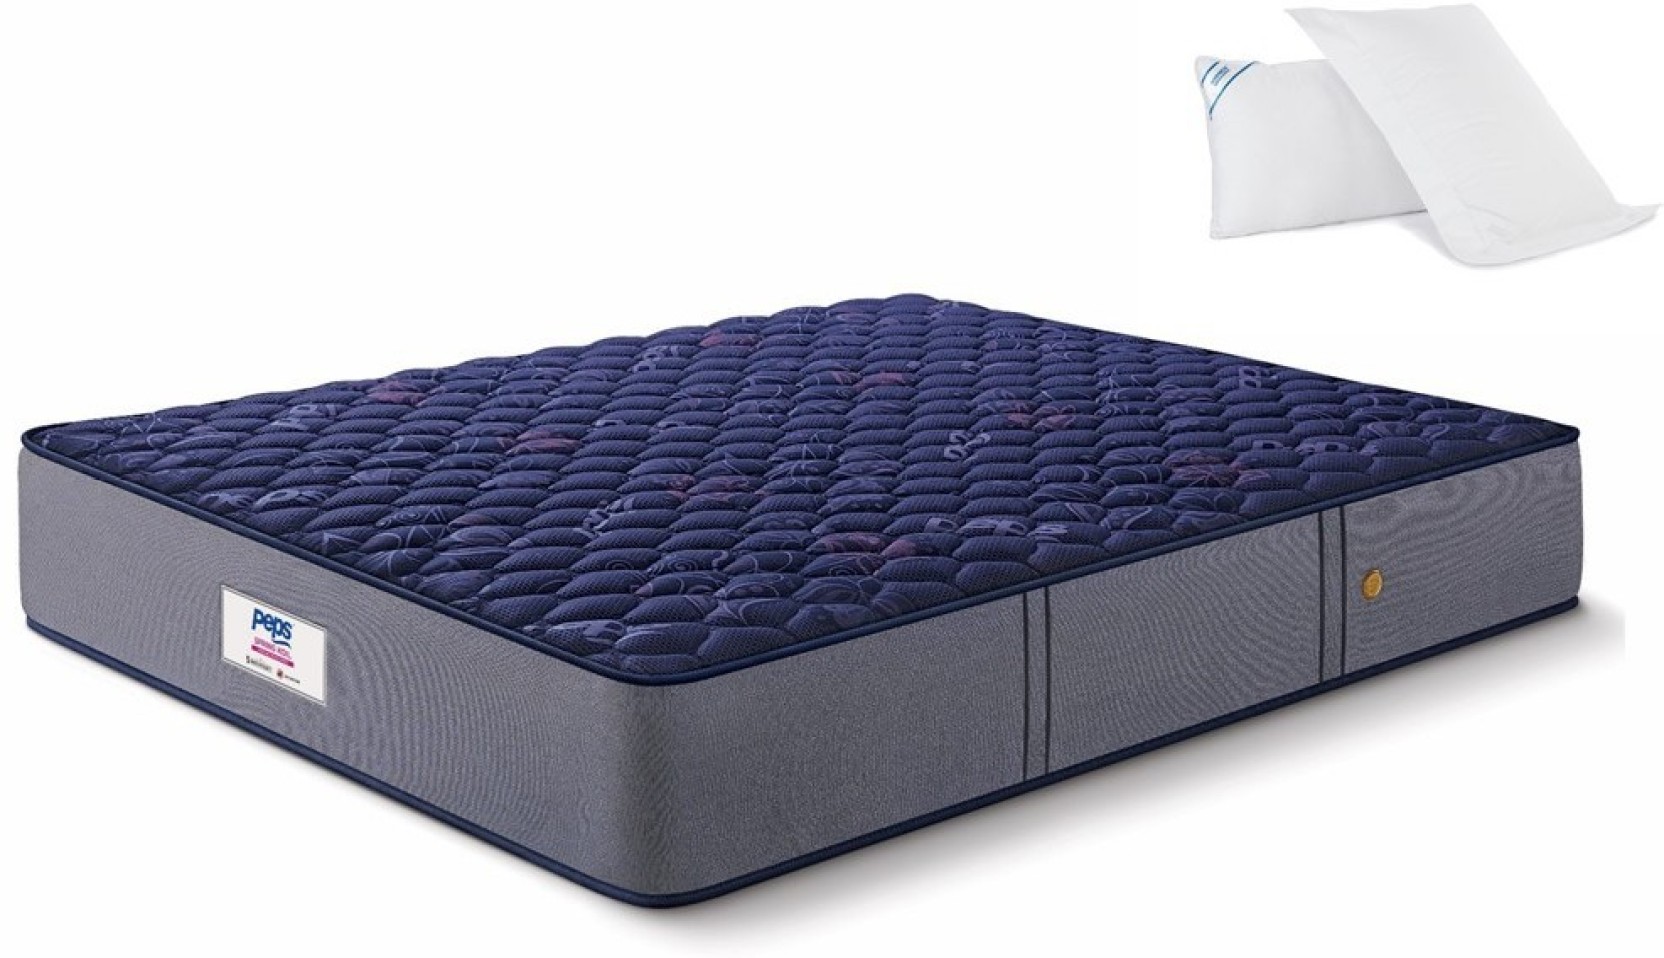 peps pocket spring mattress review